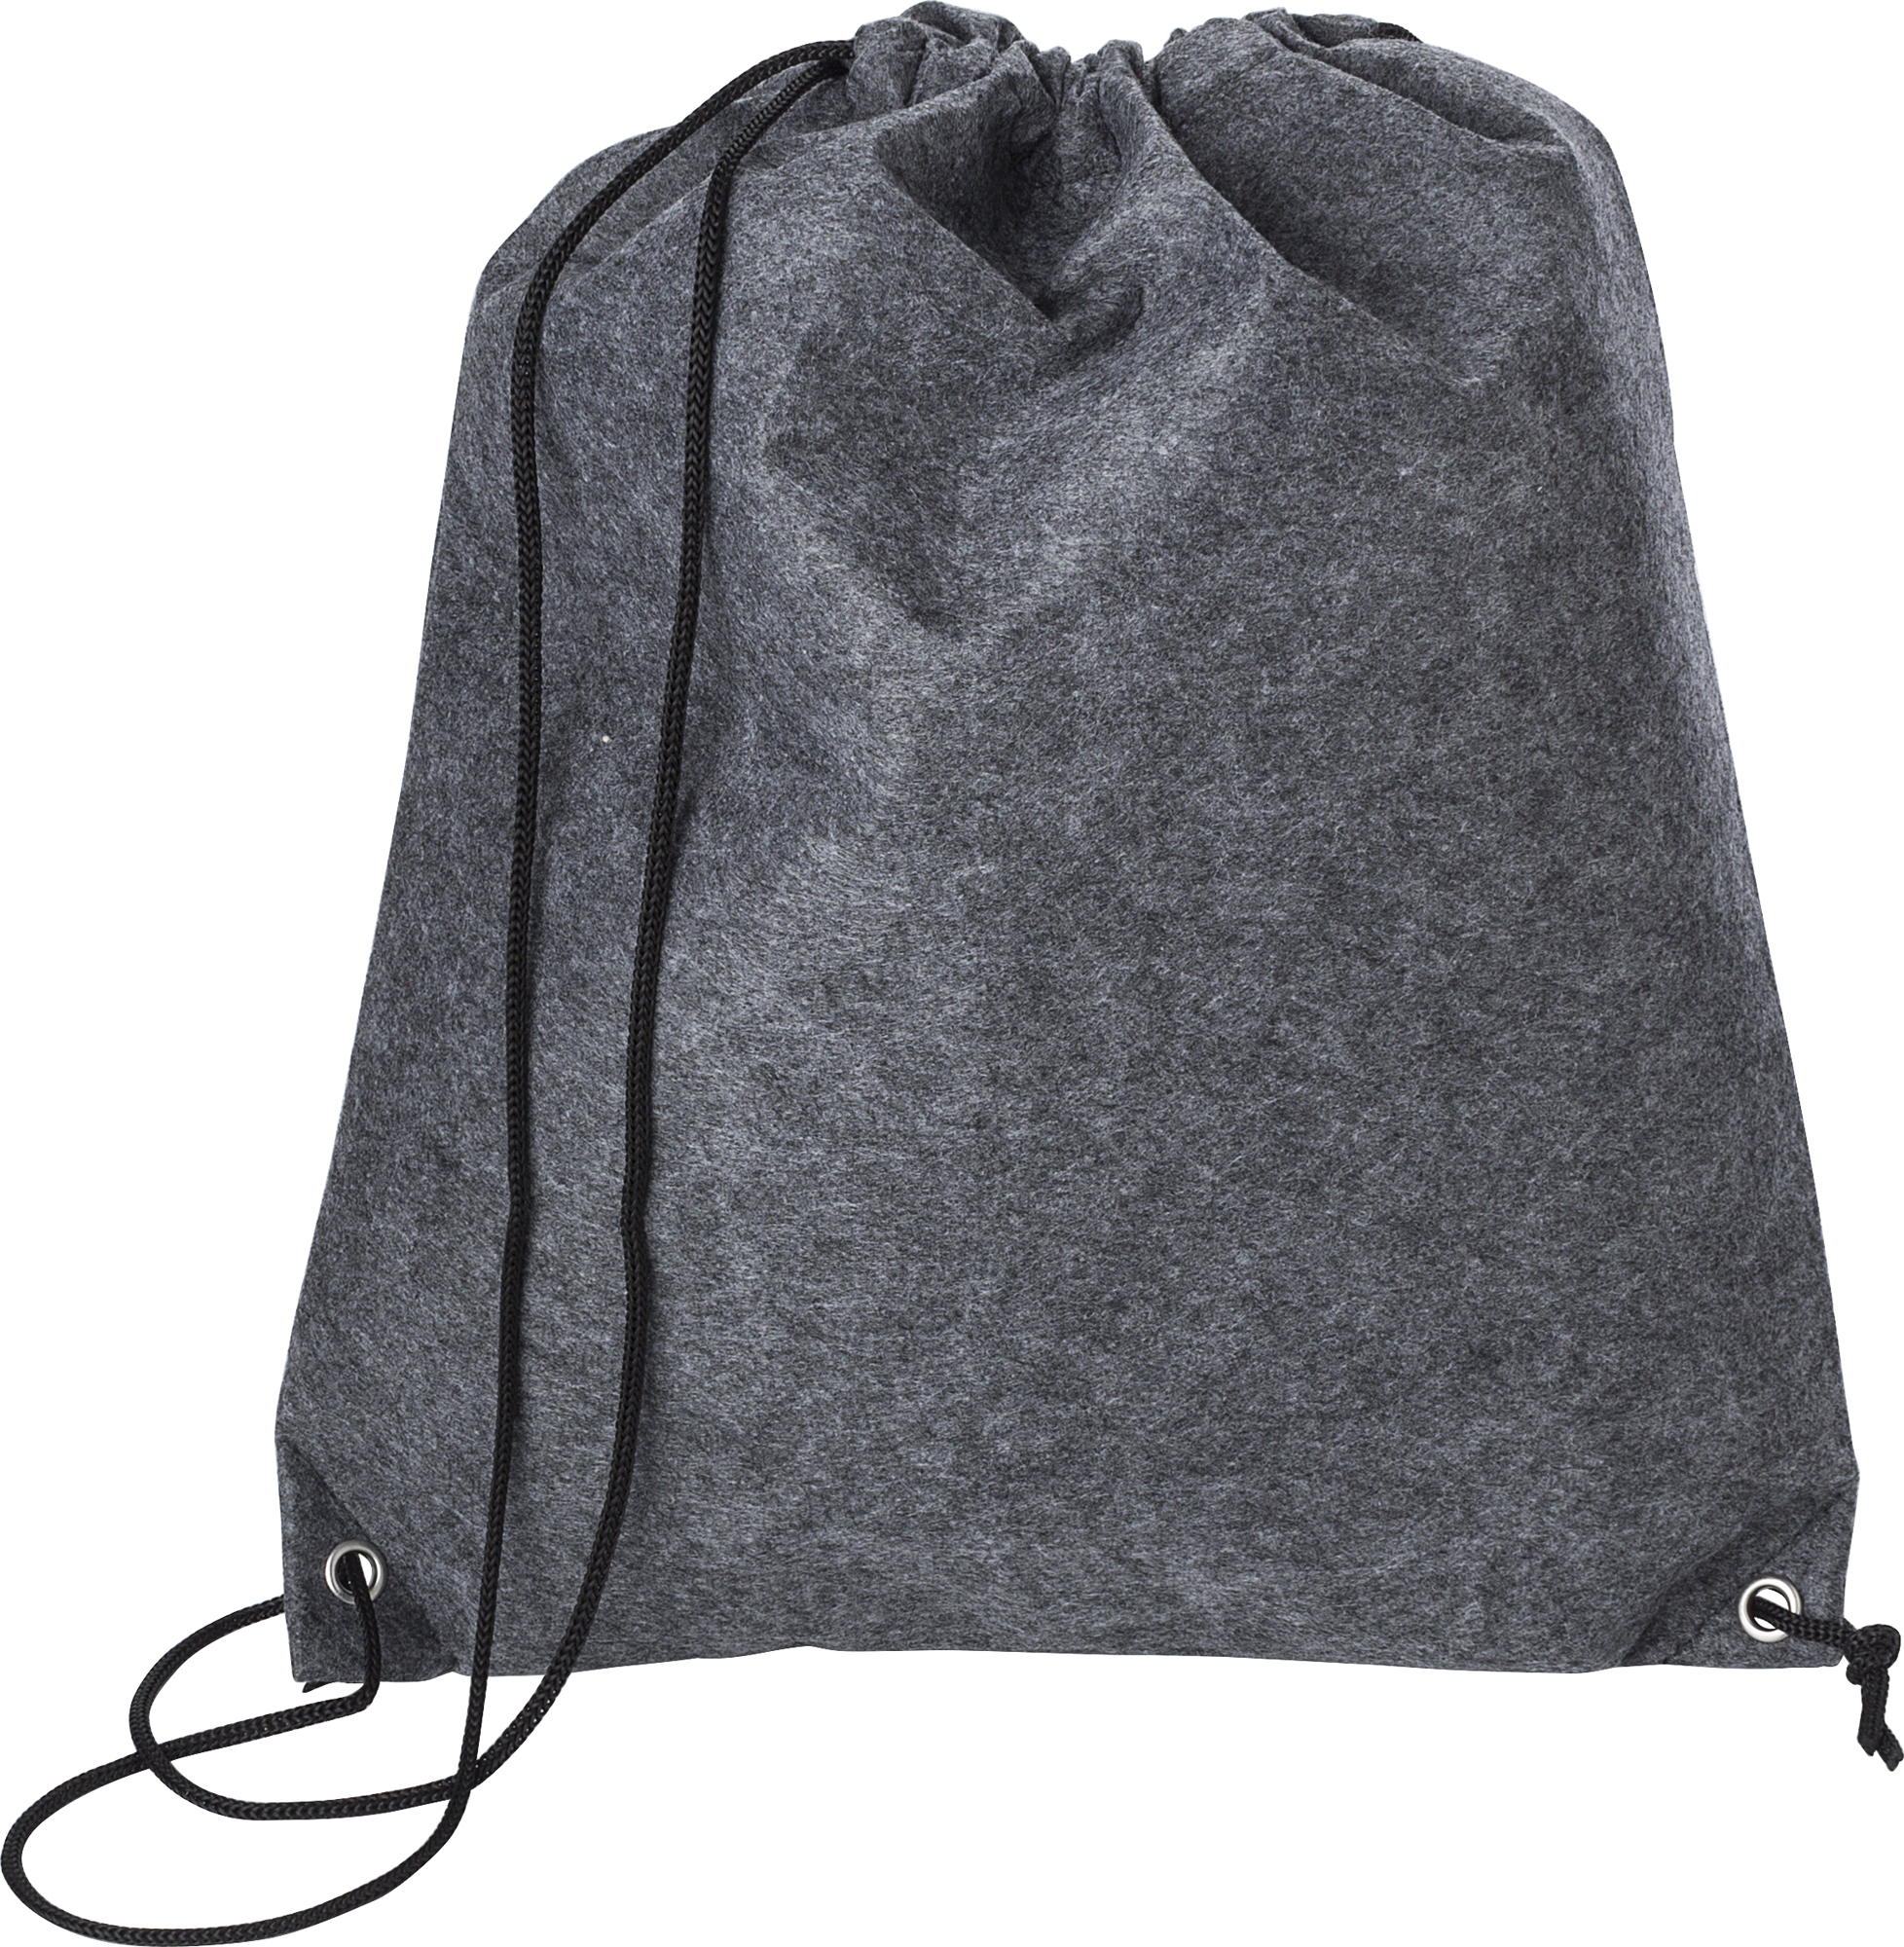 000000970950 003999999 2d090 frt pro02 2023 fal - RPET felt drawstring backpack